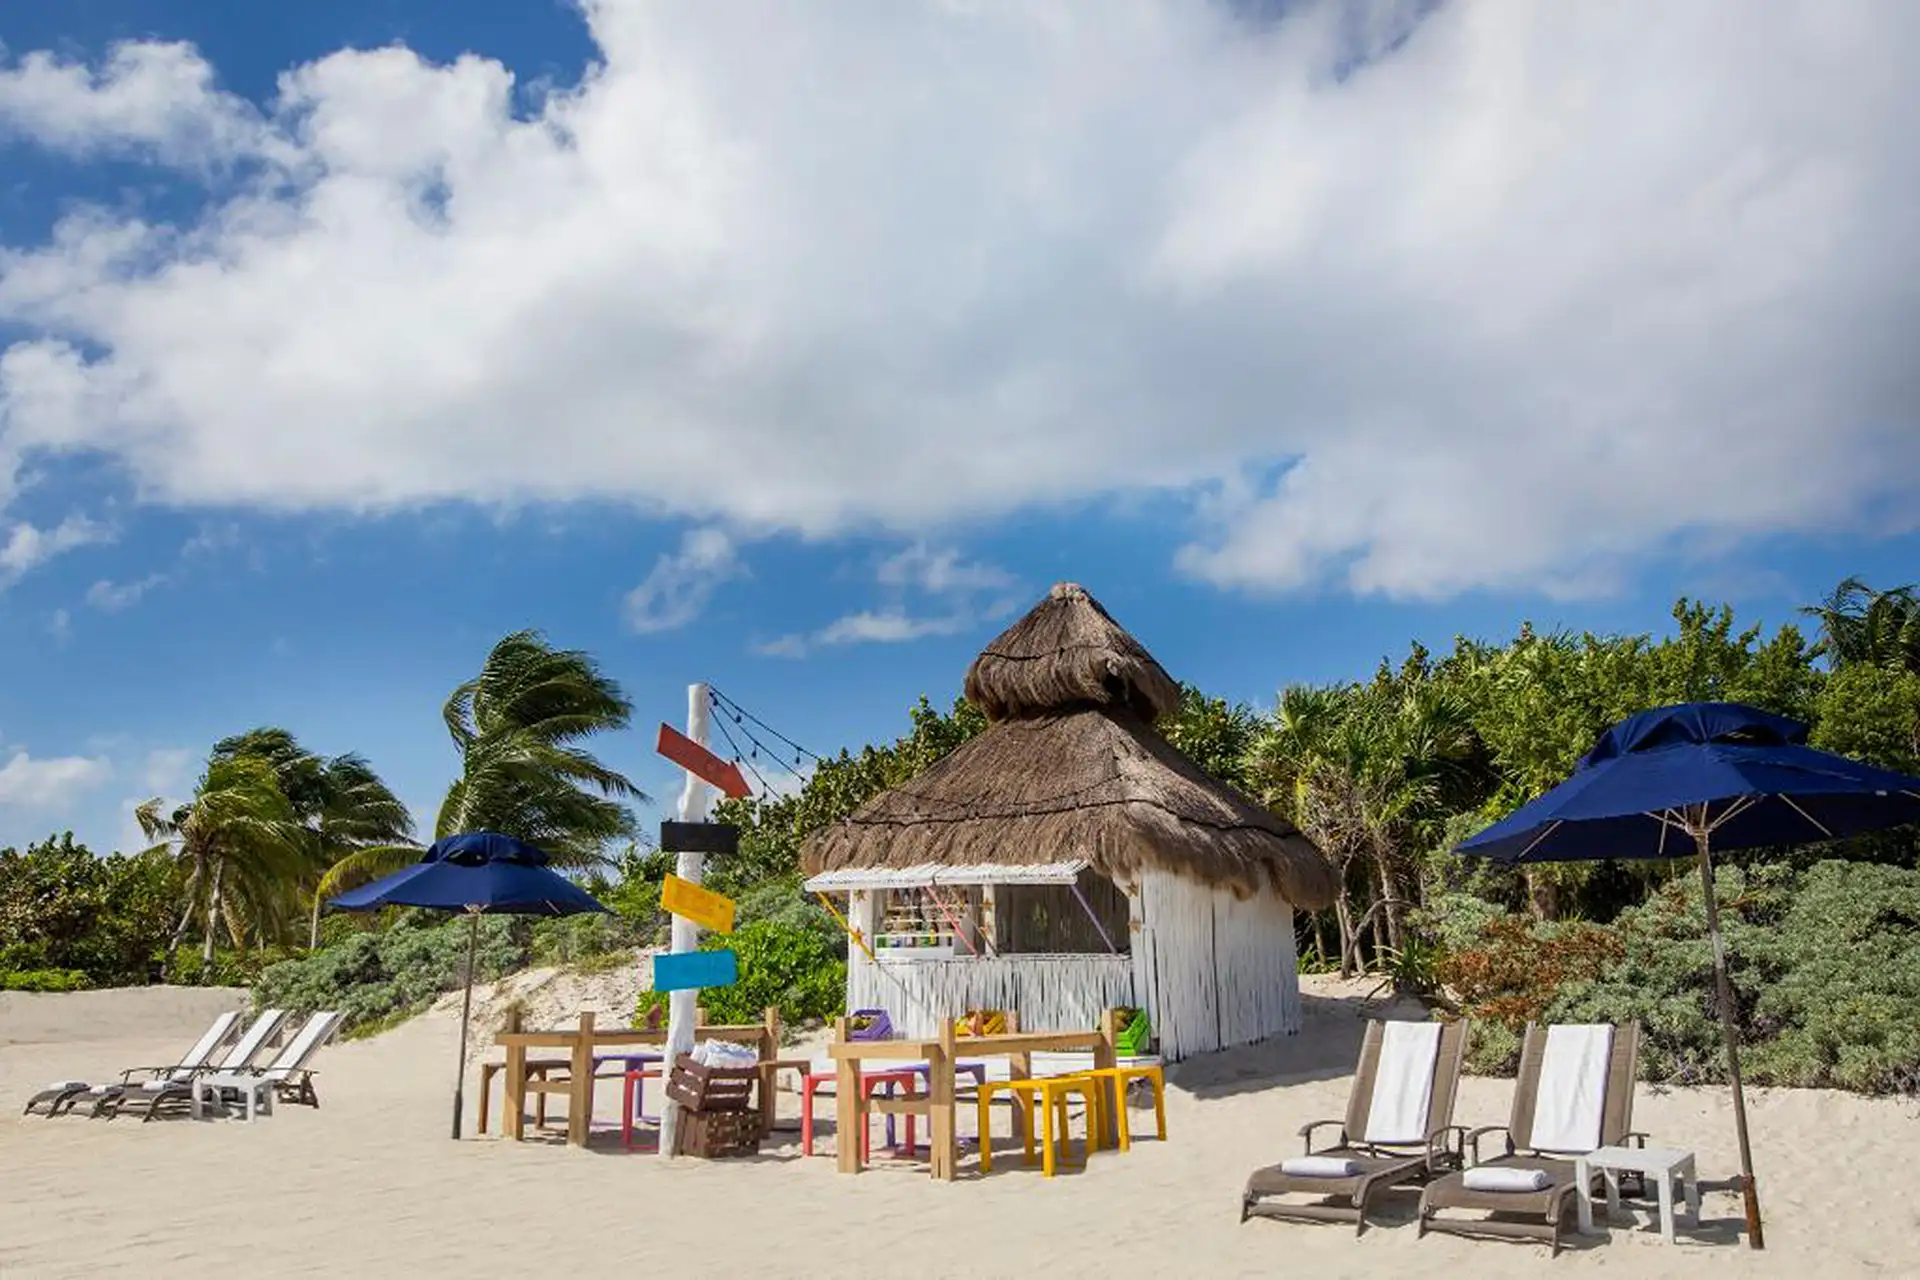 Banyan Tre Mayakoba, hut on the beach with umbrellas and beach chairs